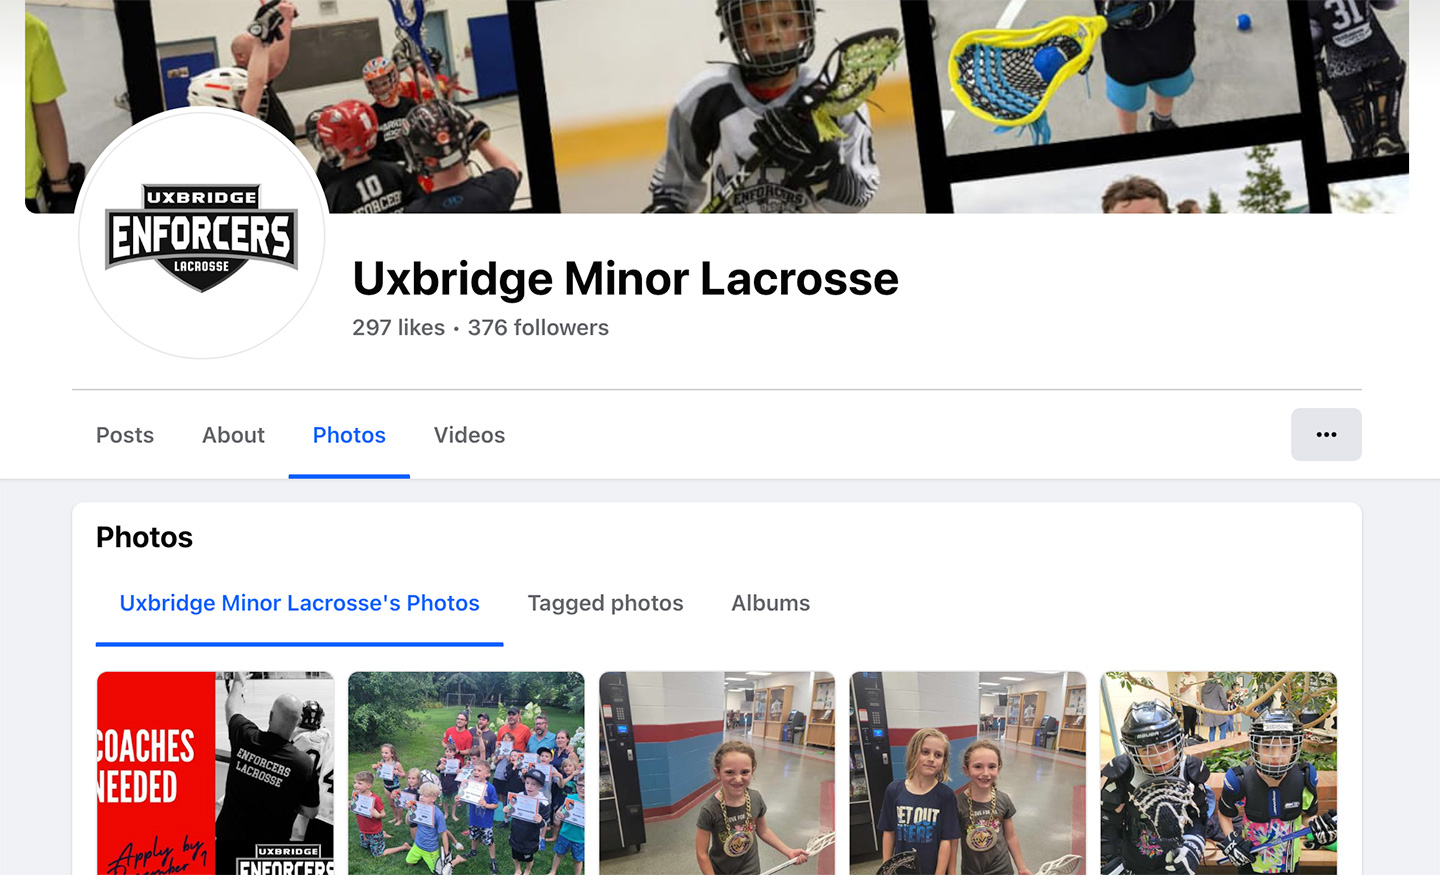 uxbridge-enforcers-lacrosse-logo-design-facebook2